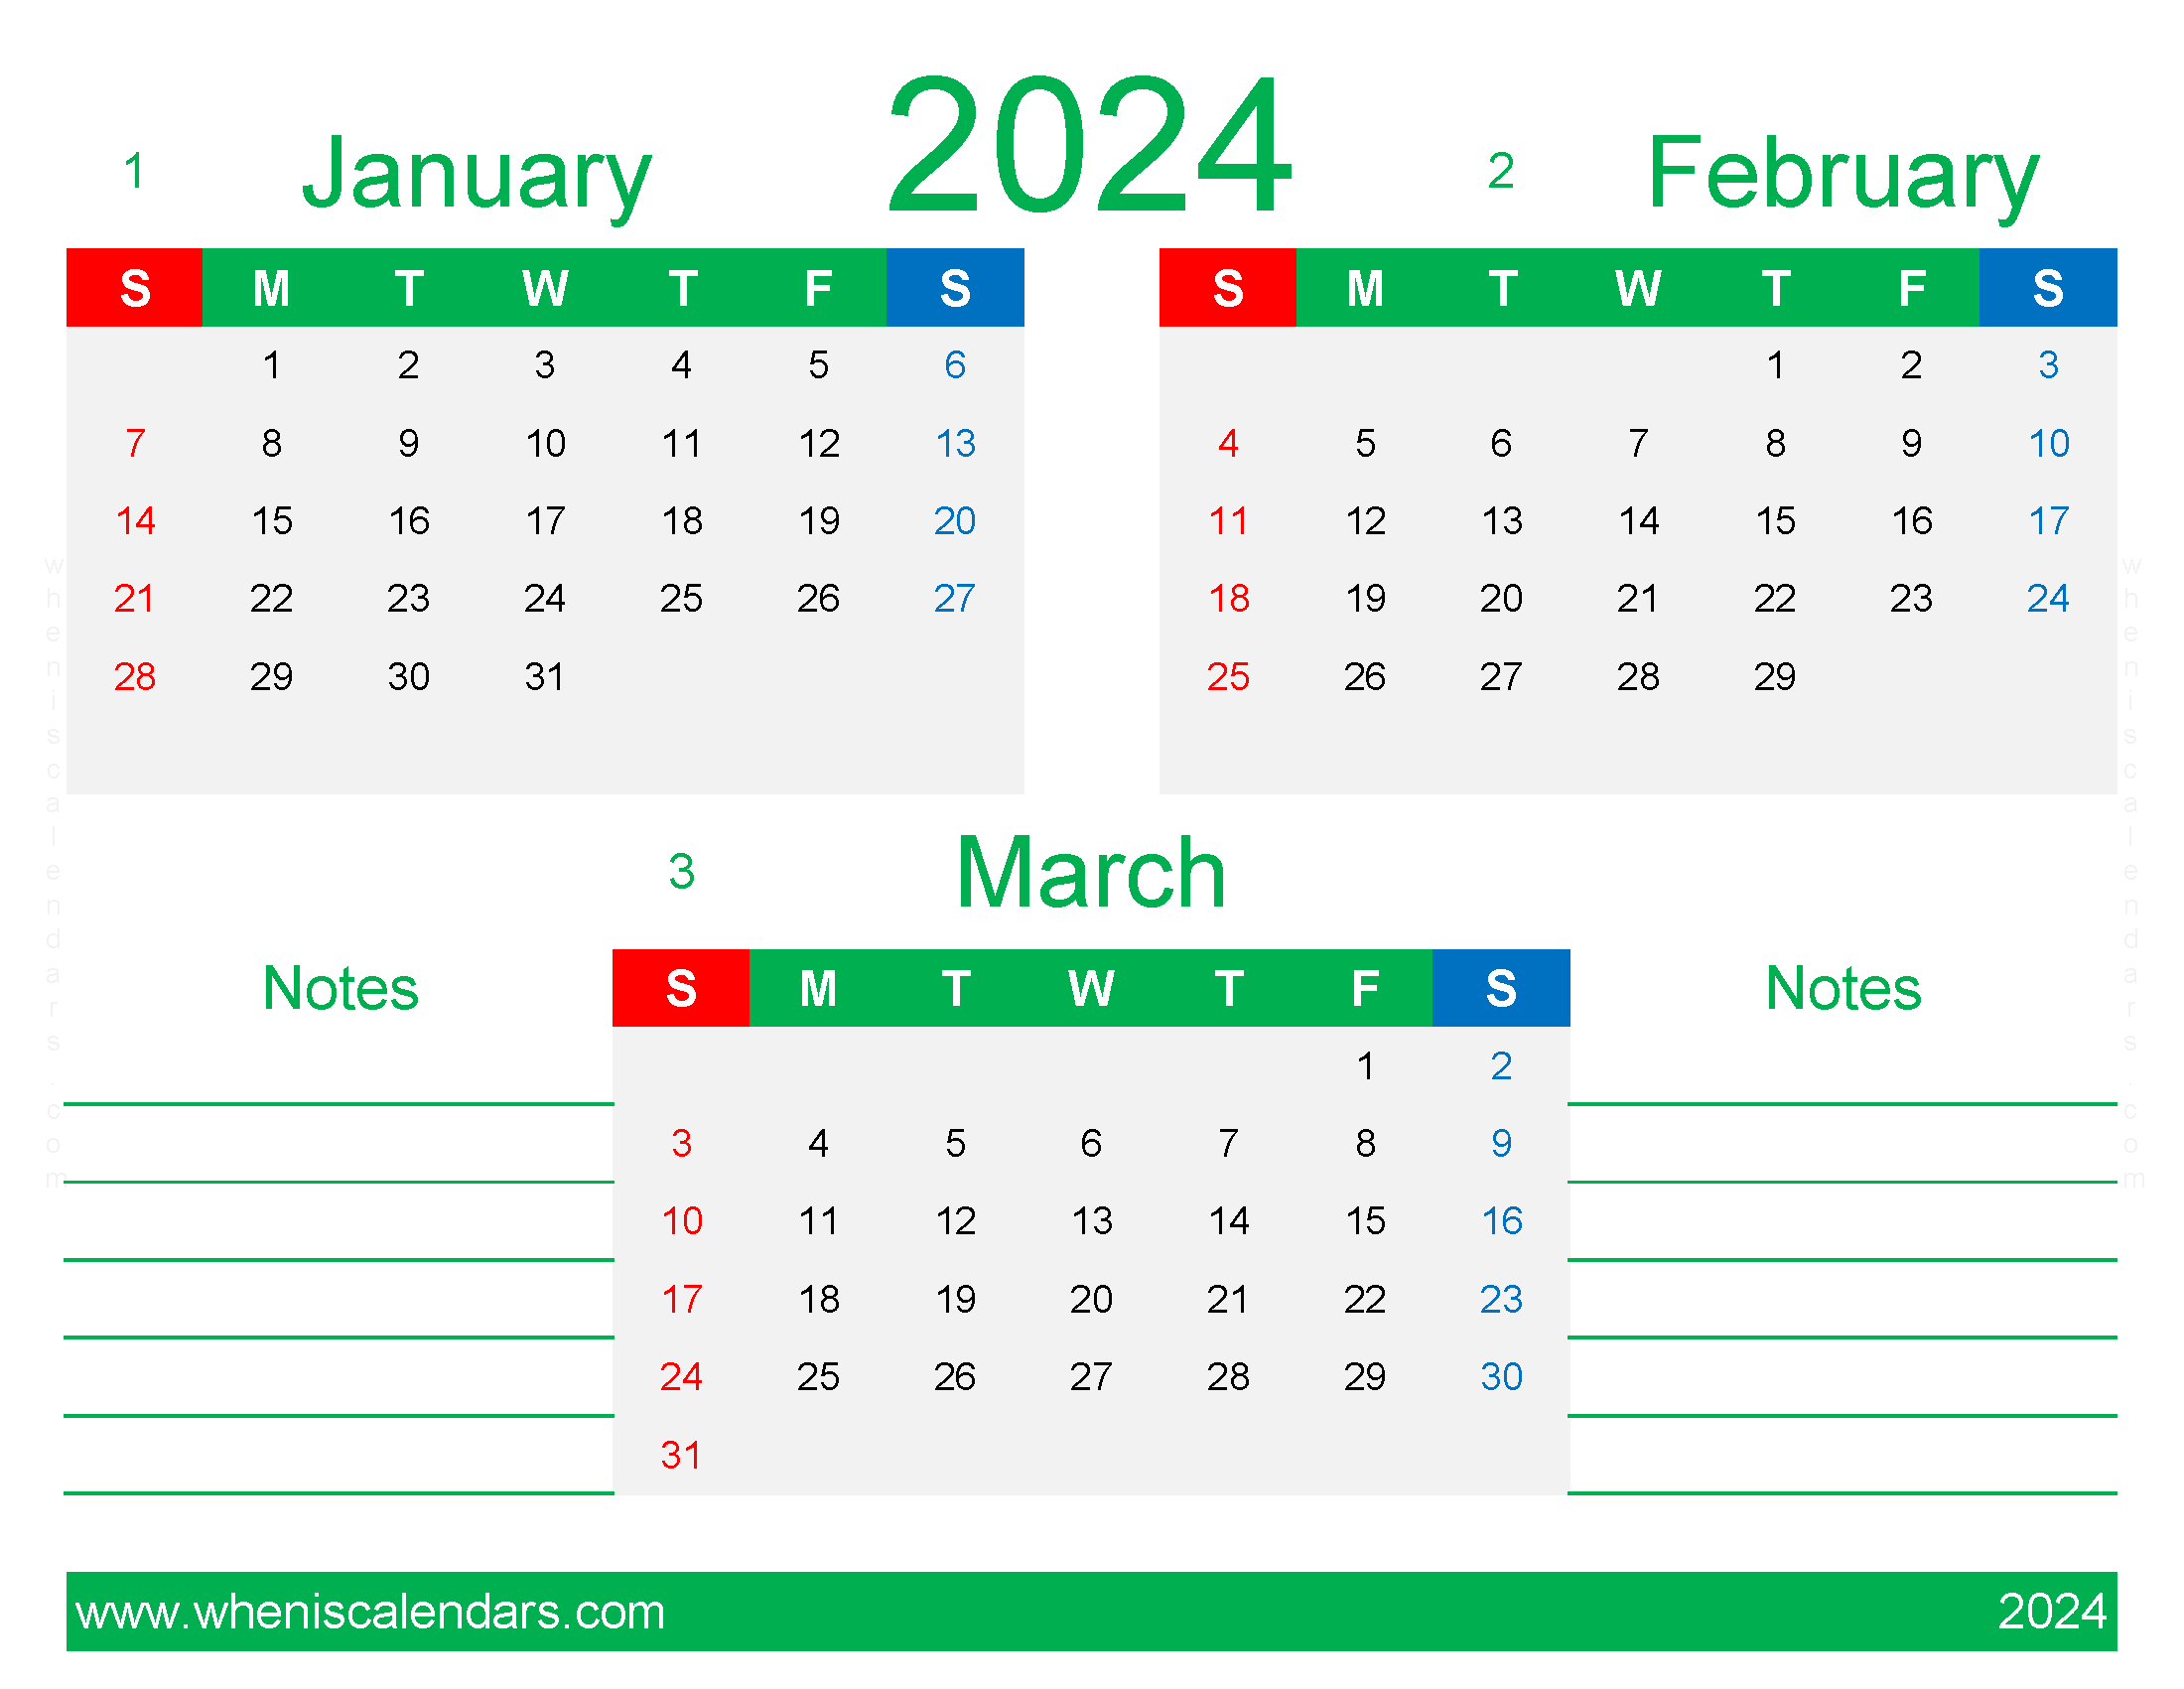 Download Jan Feb and March 2024 calendar JFM432